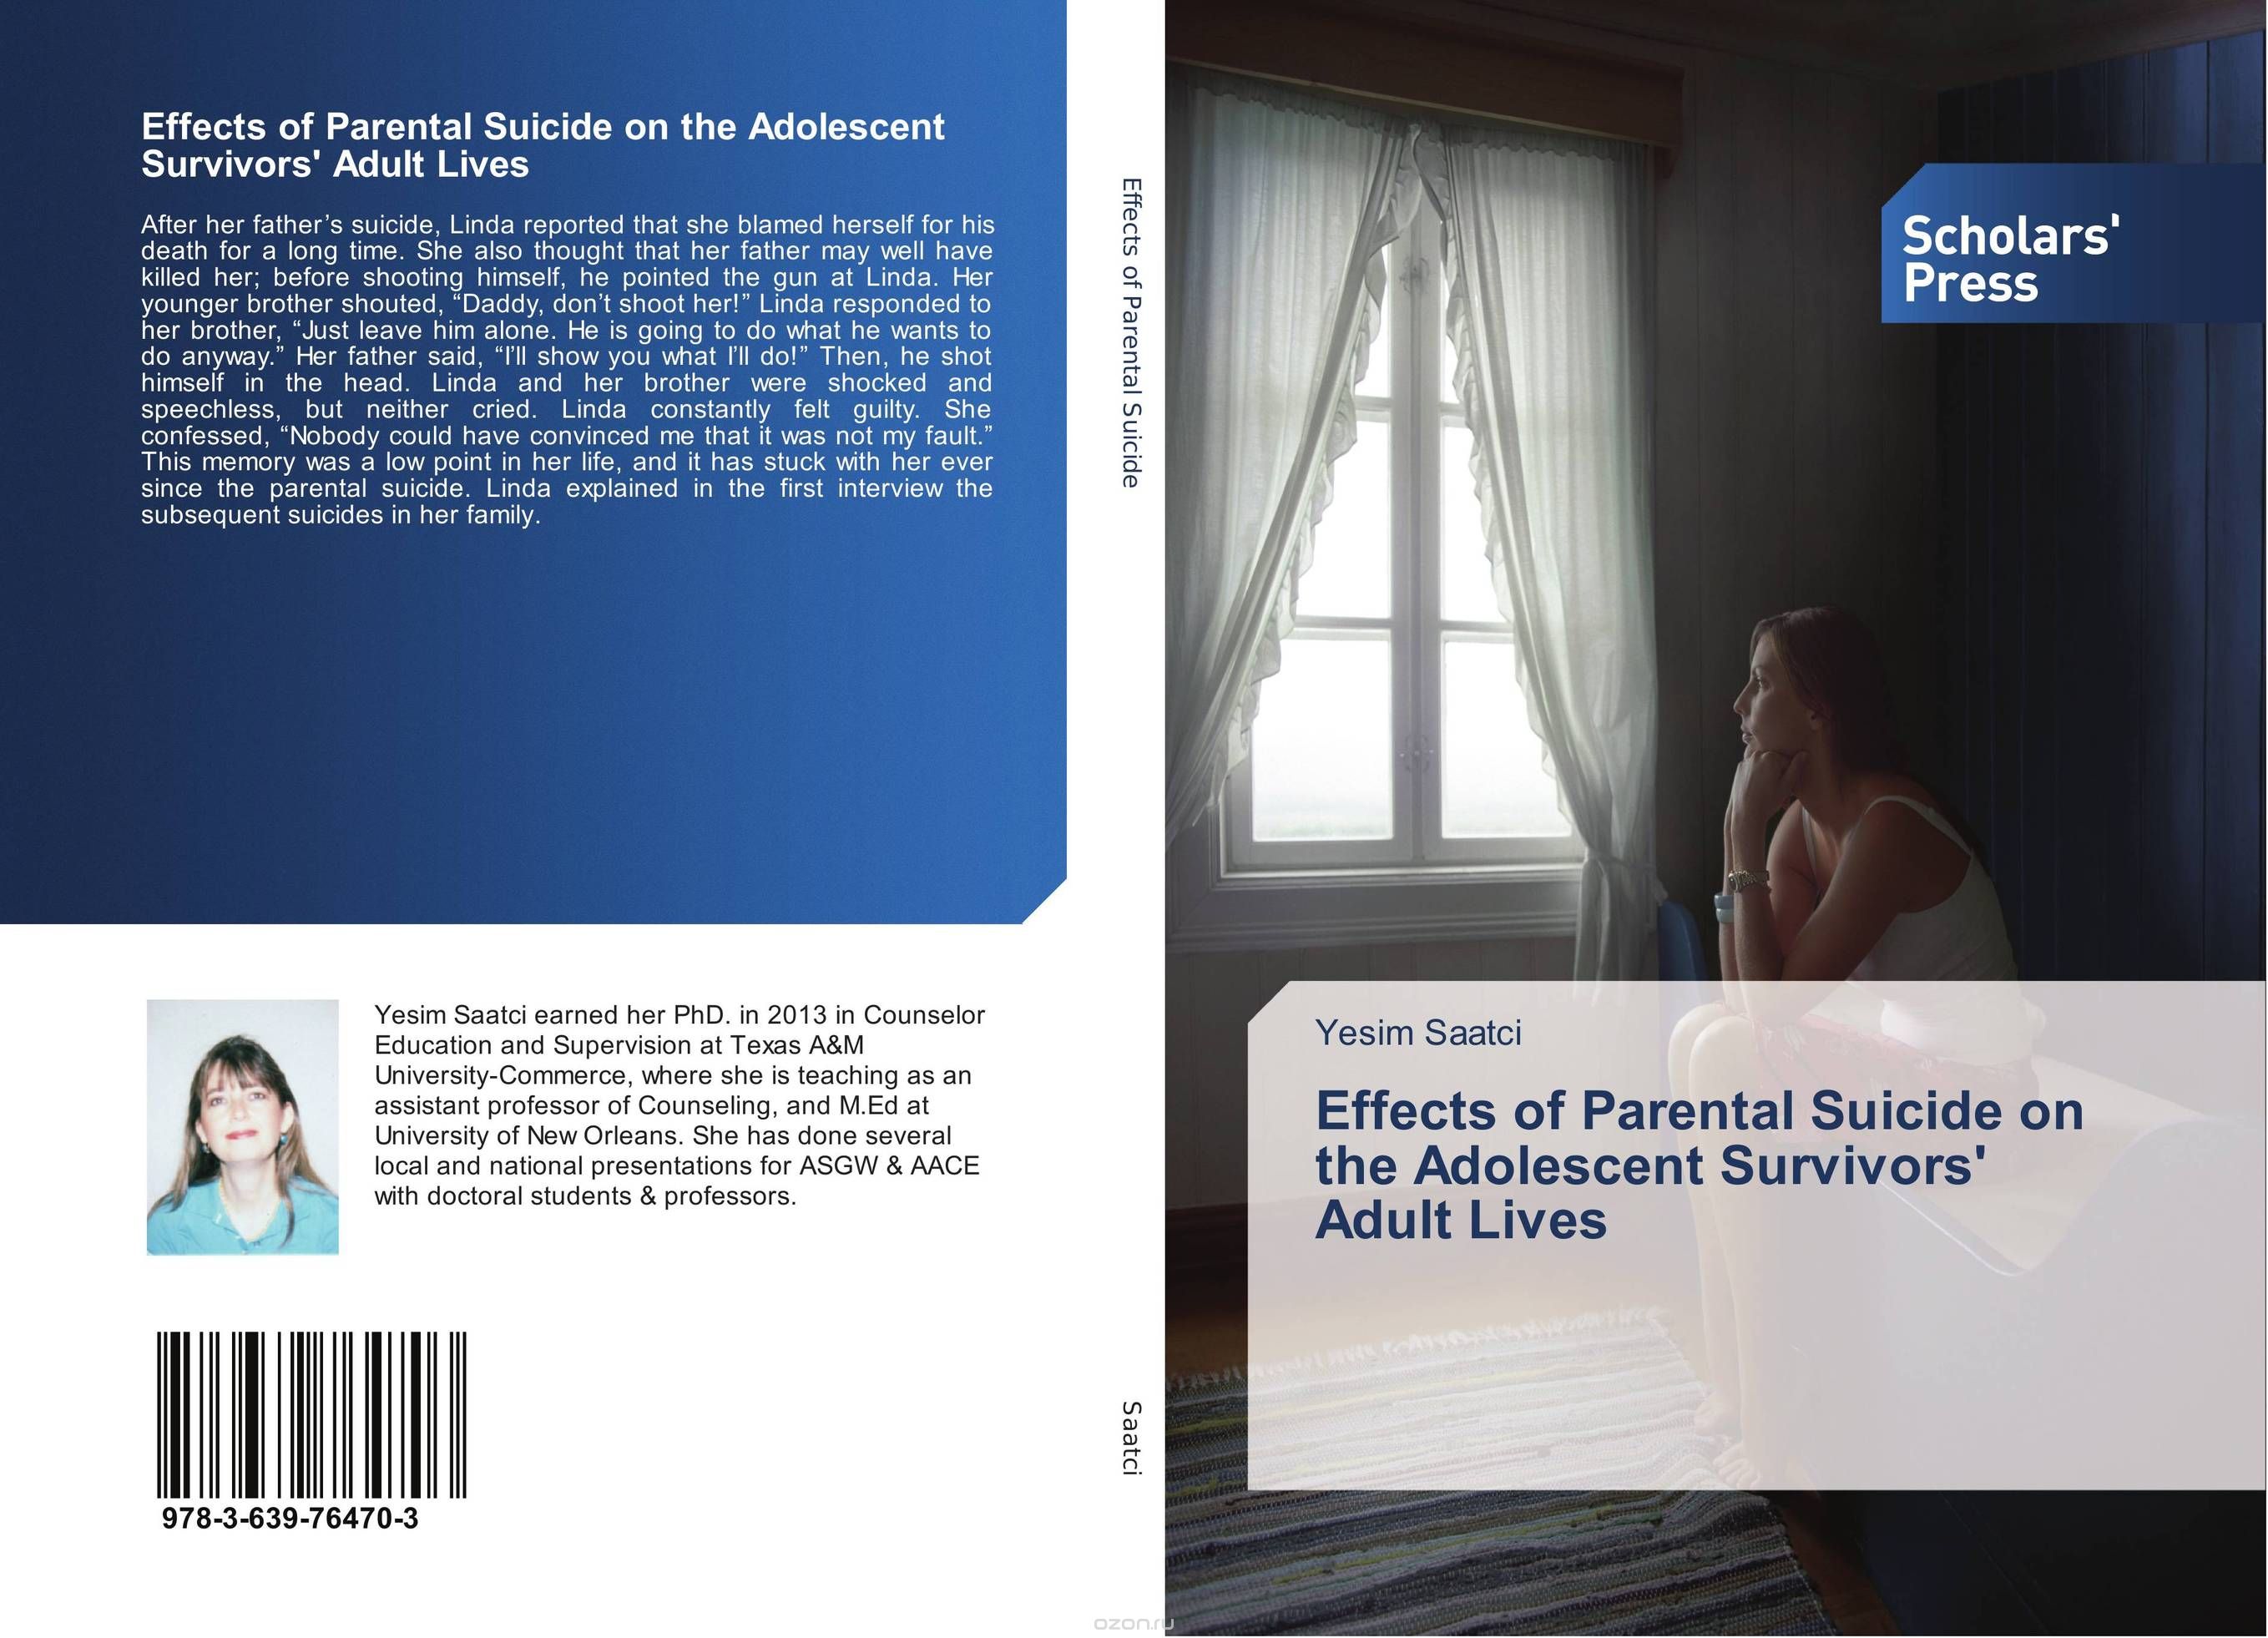 Скачать книгу "Effects of Parental Suicide on the Adolescent Survivors' Adult Lives"